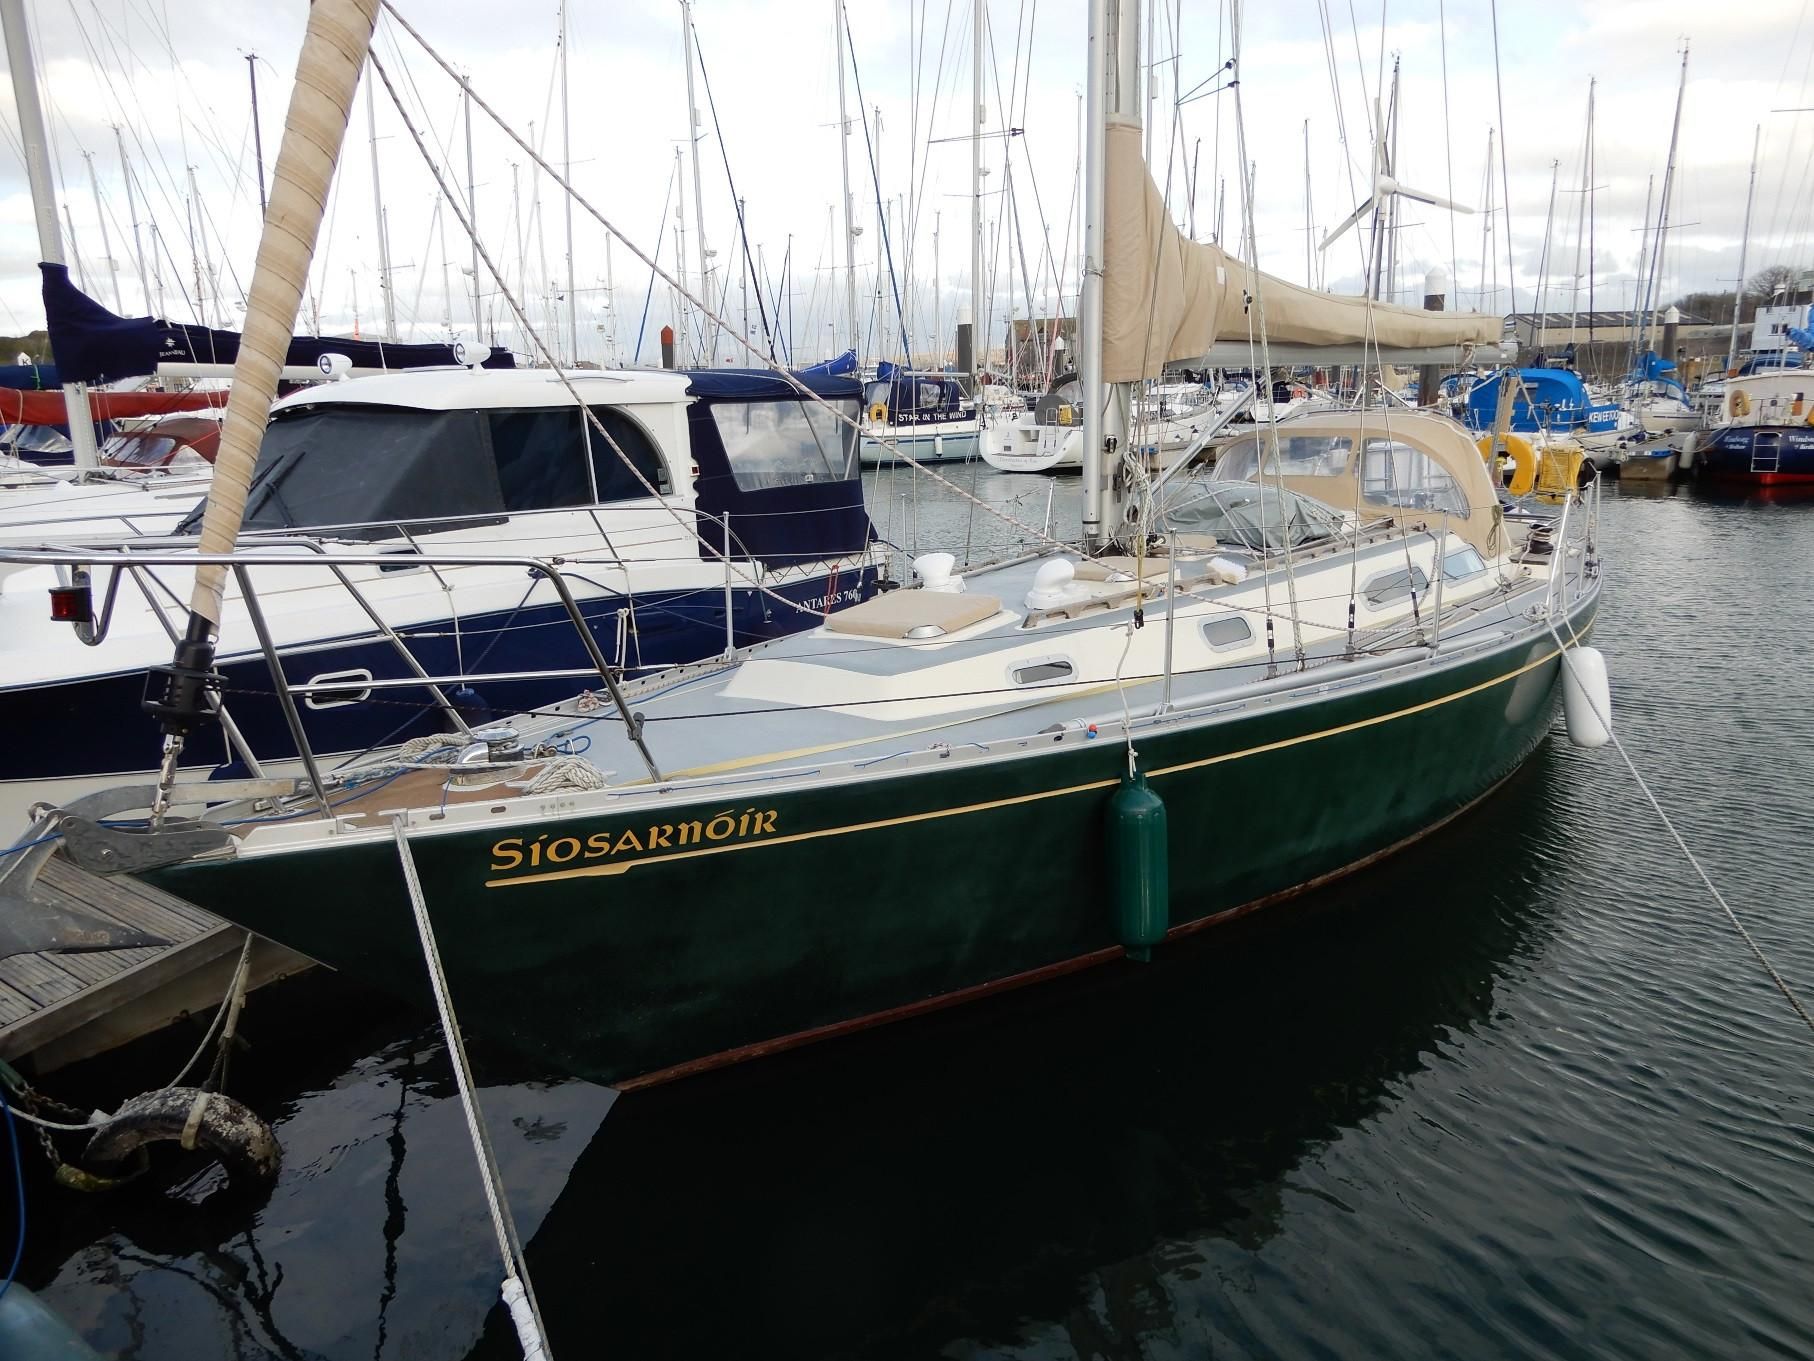 rustler 36 sailboats for sale